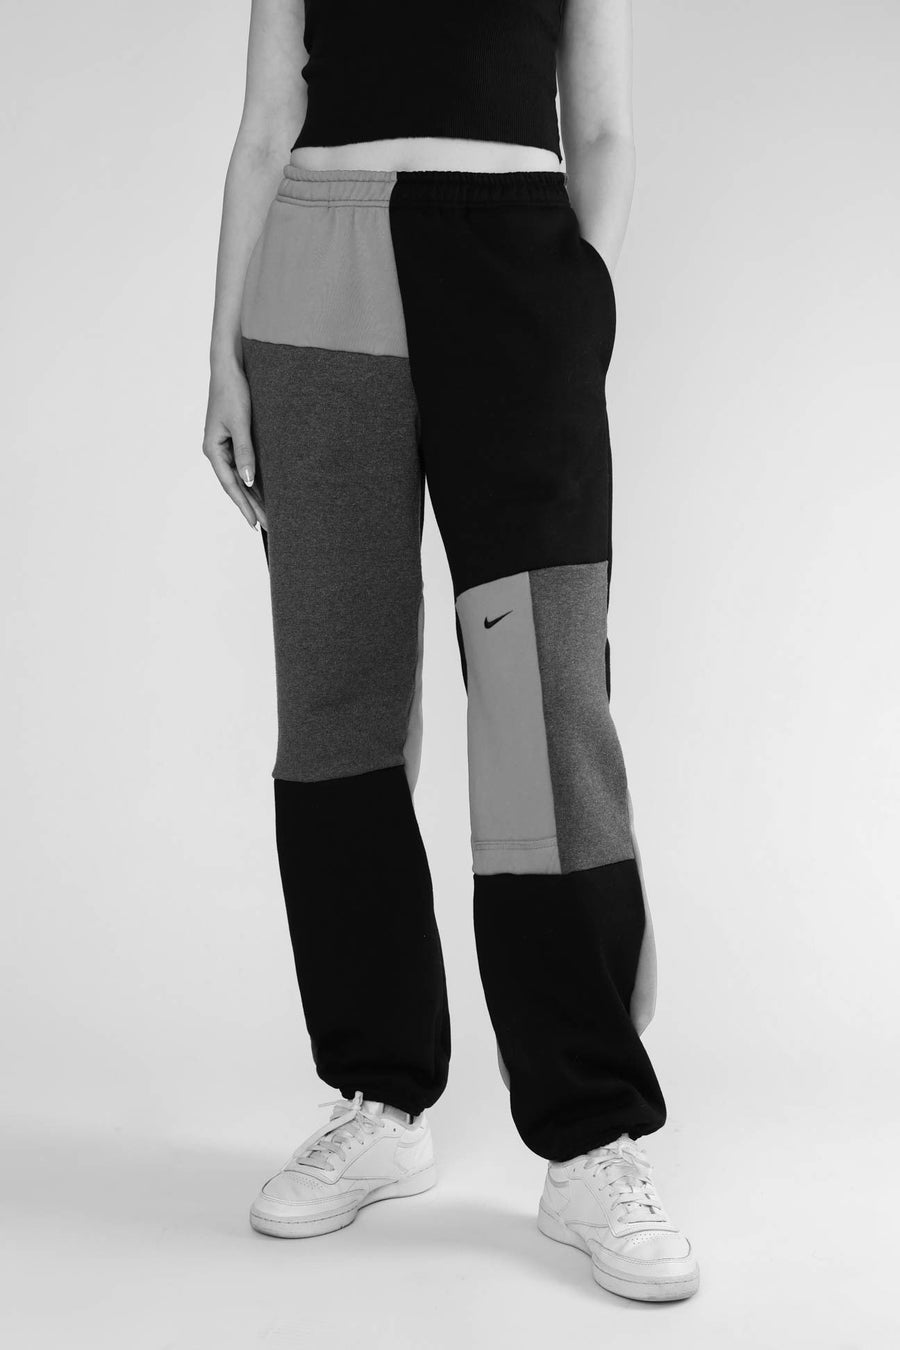 Unisex Patchwork Nike Sweatpants - Women-S, Men-XS